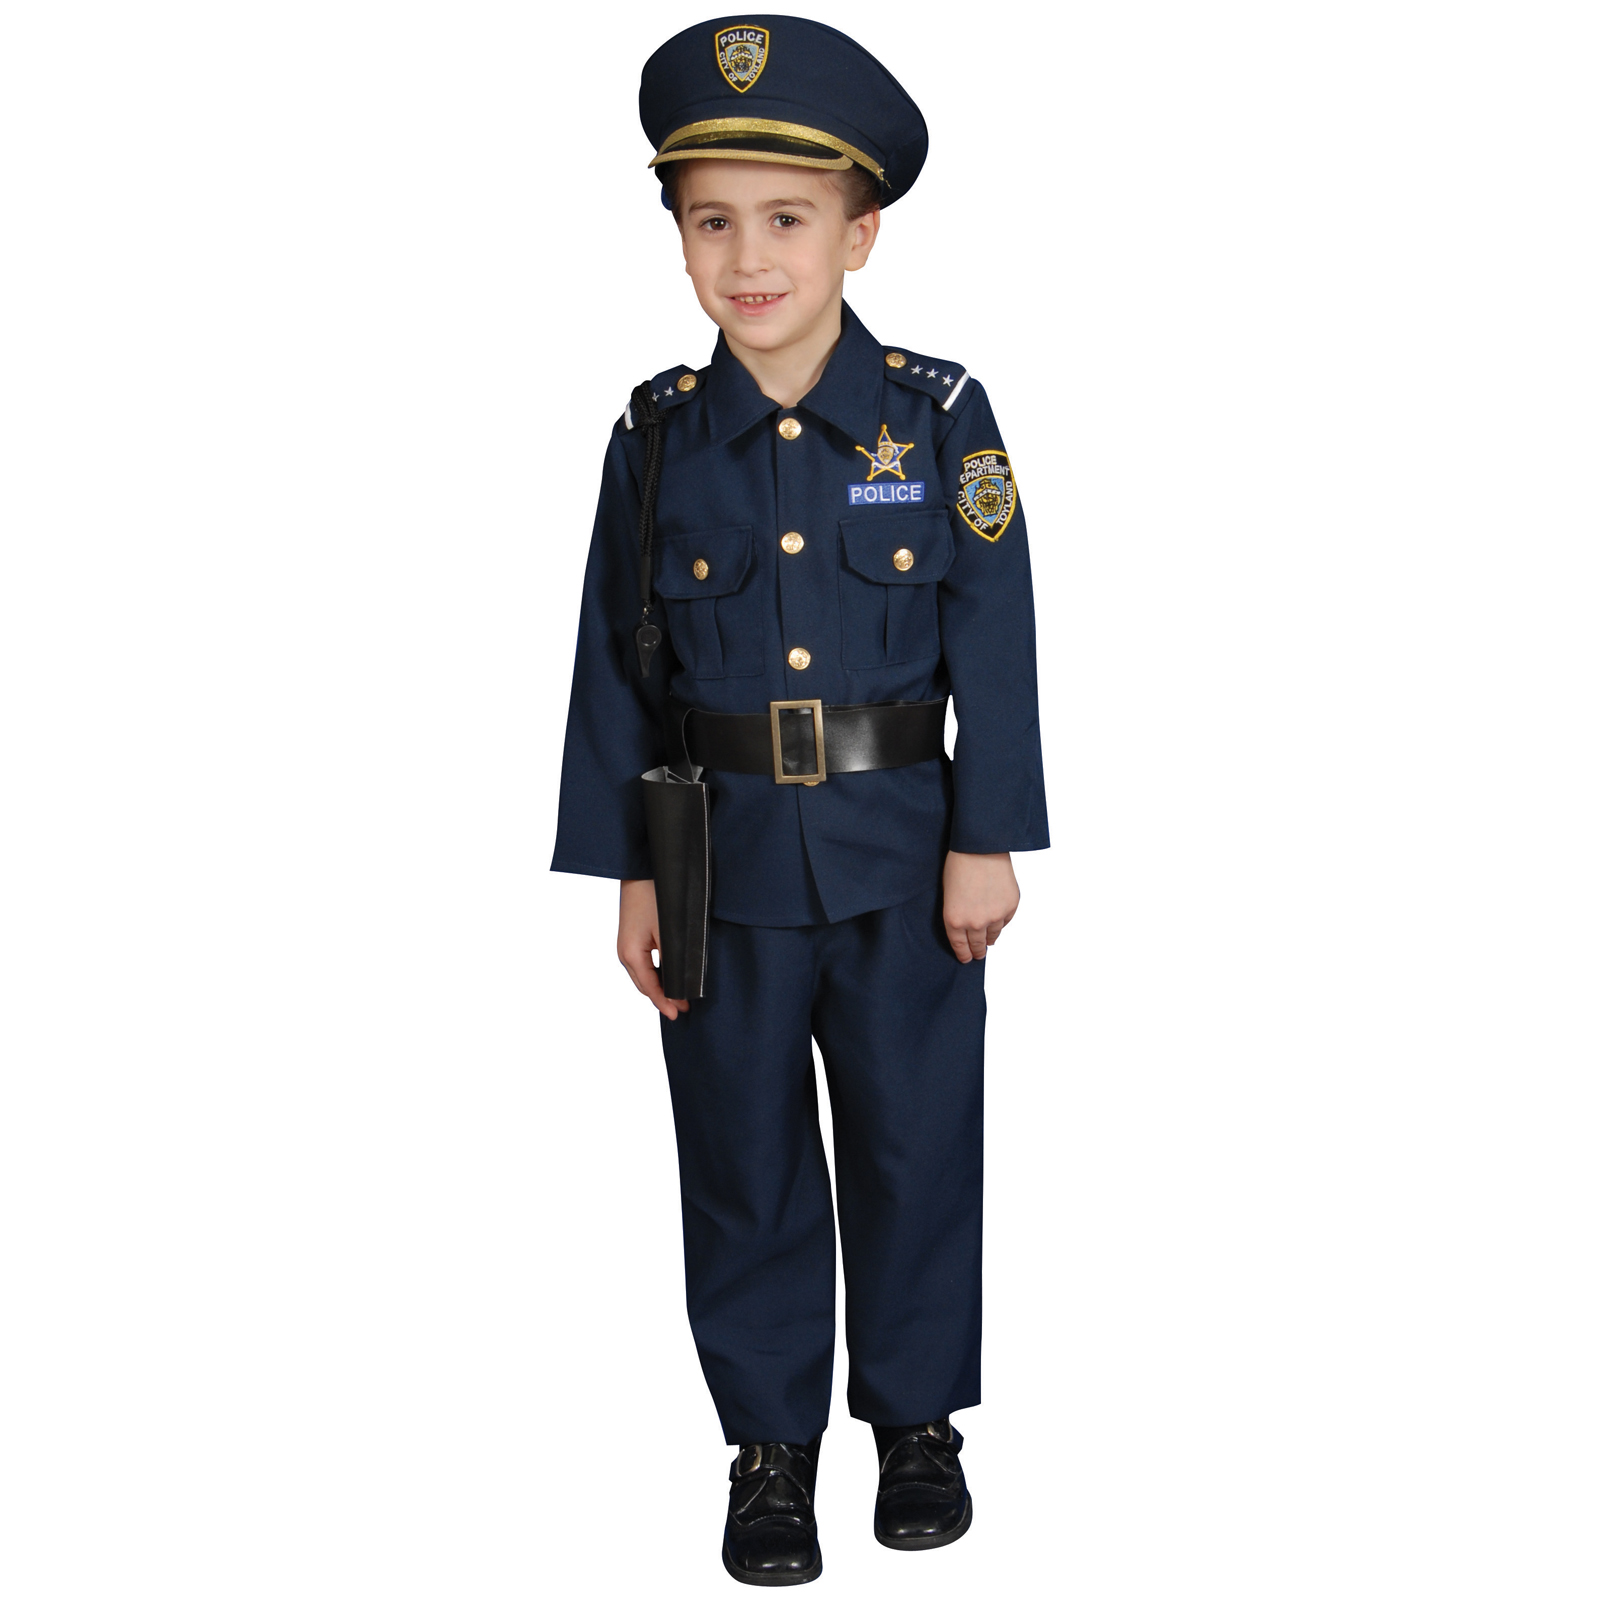 Boys Policeman Halloween Costume Size: S